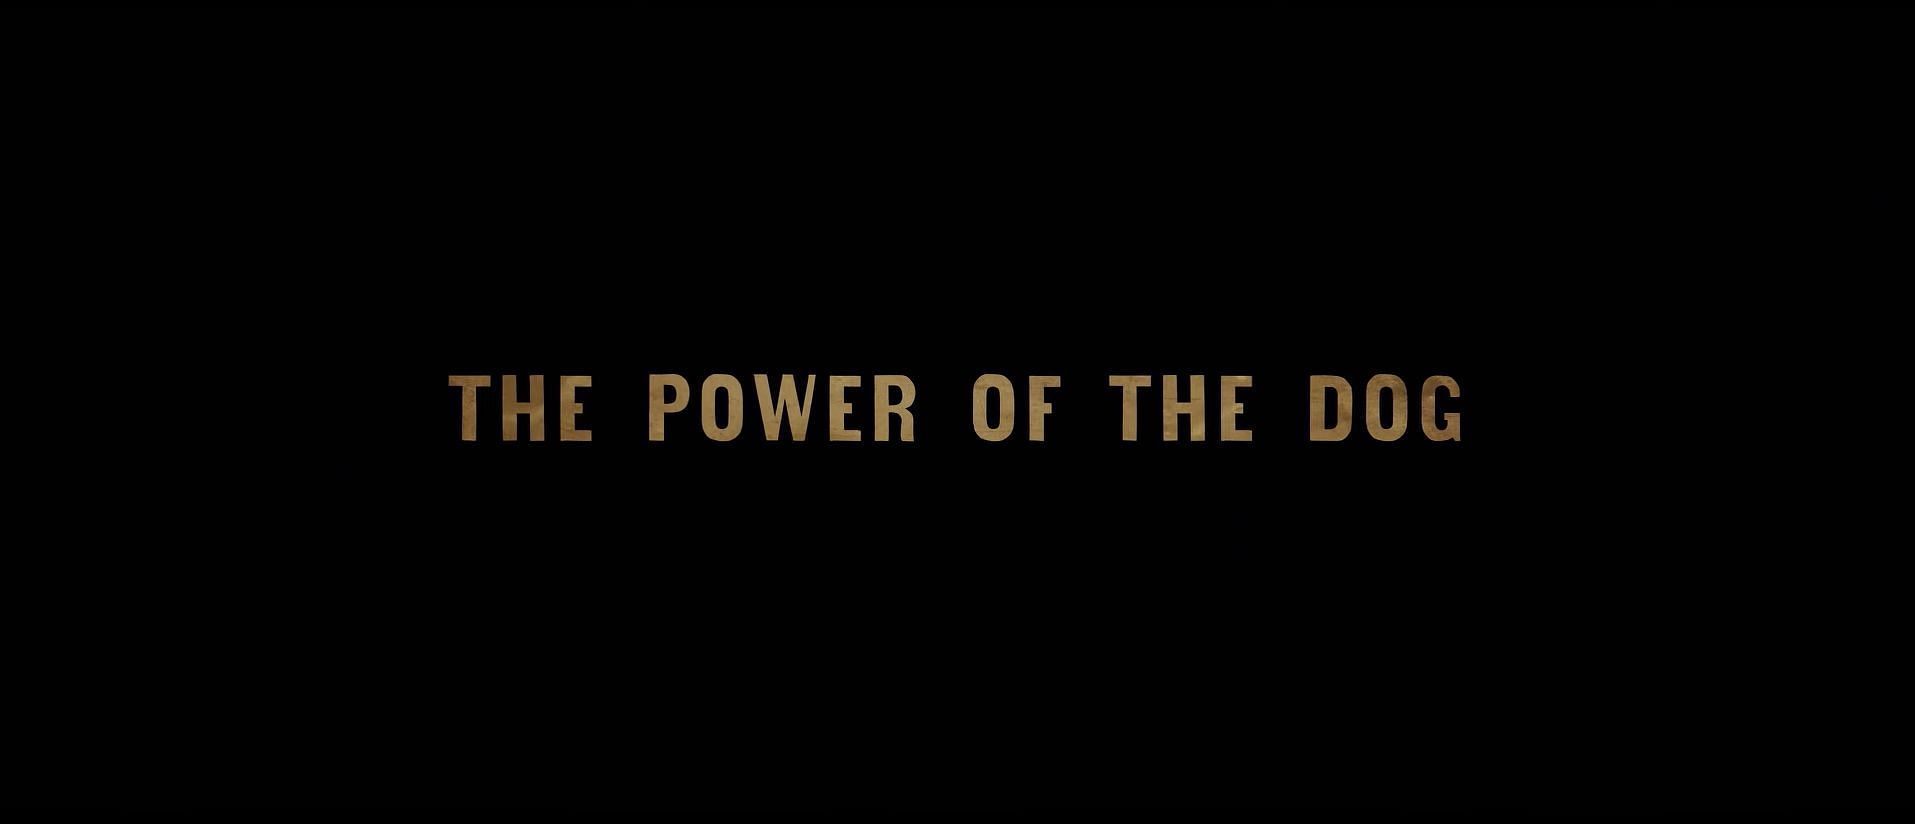 The Power of the Dog (Image via Netflix)